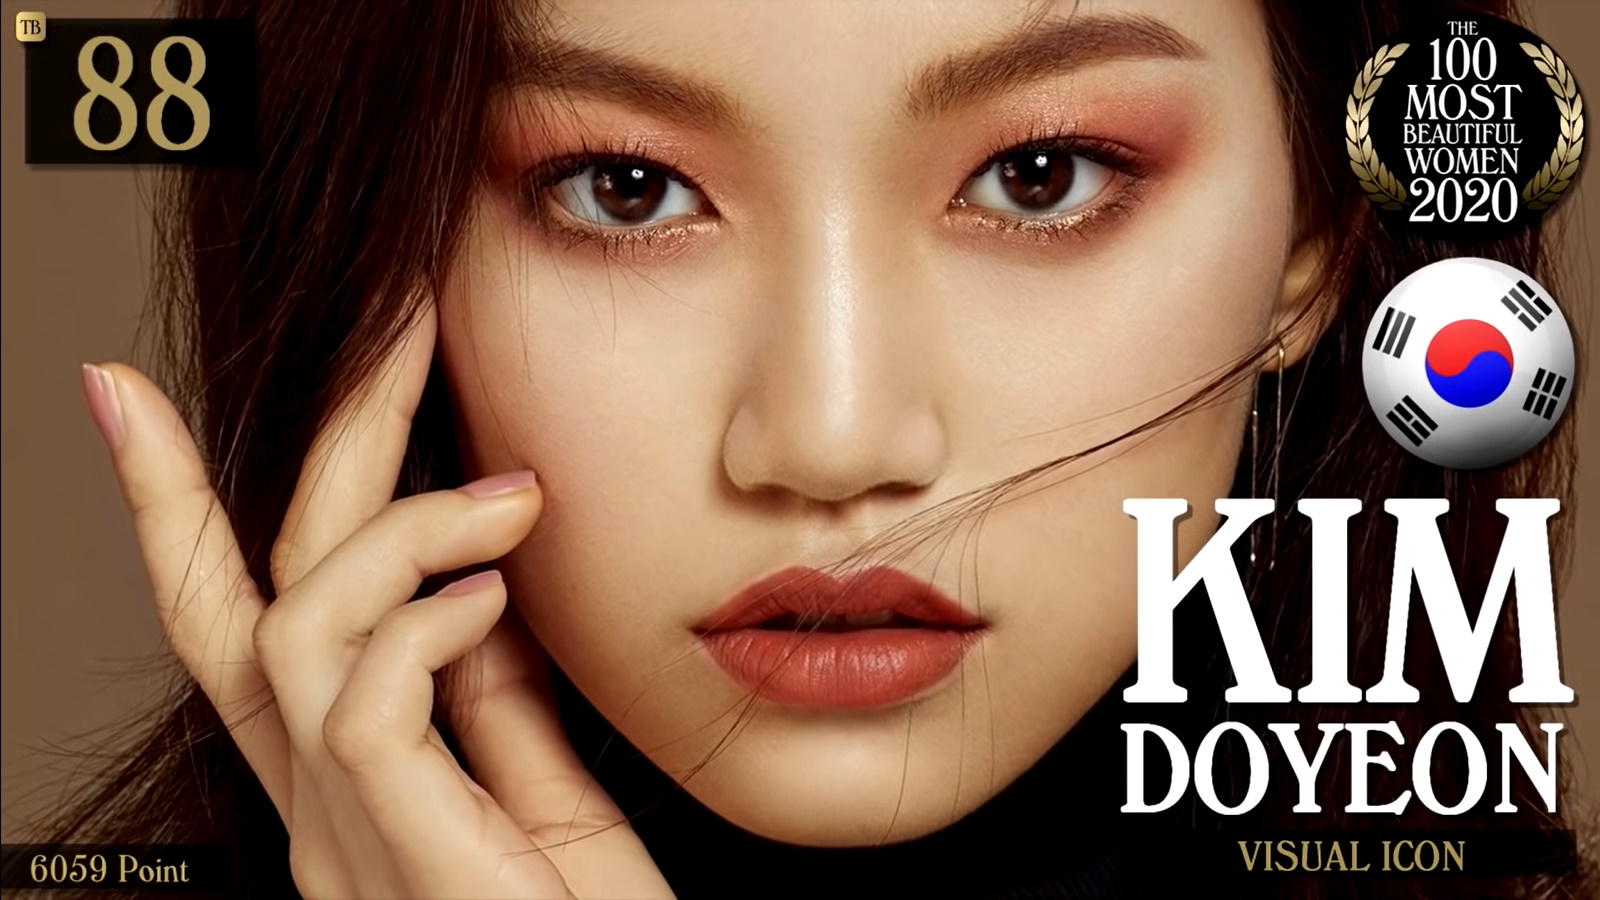 Kim Doyeon - The 100 Most Beautiful Women Of 2020